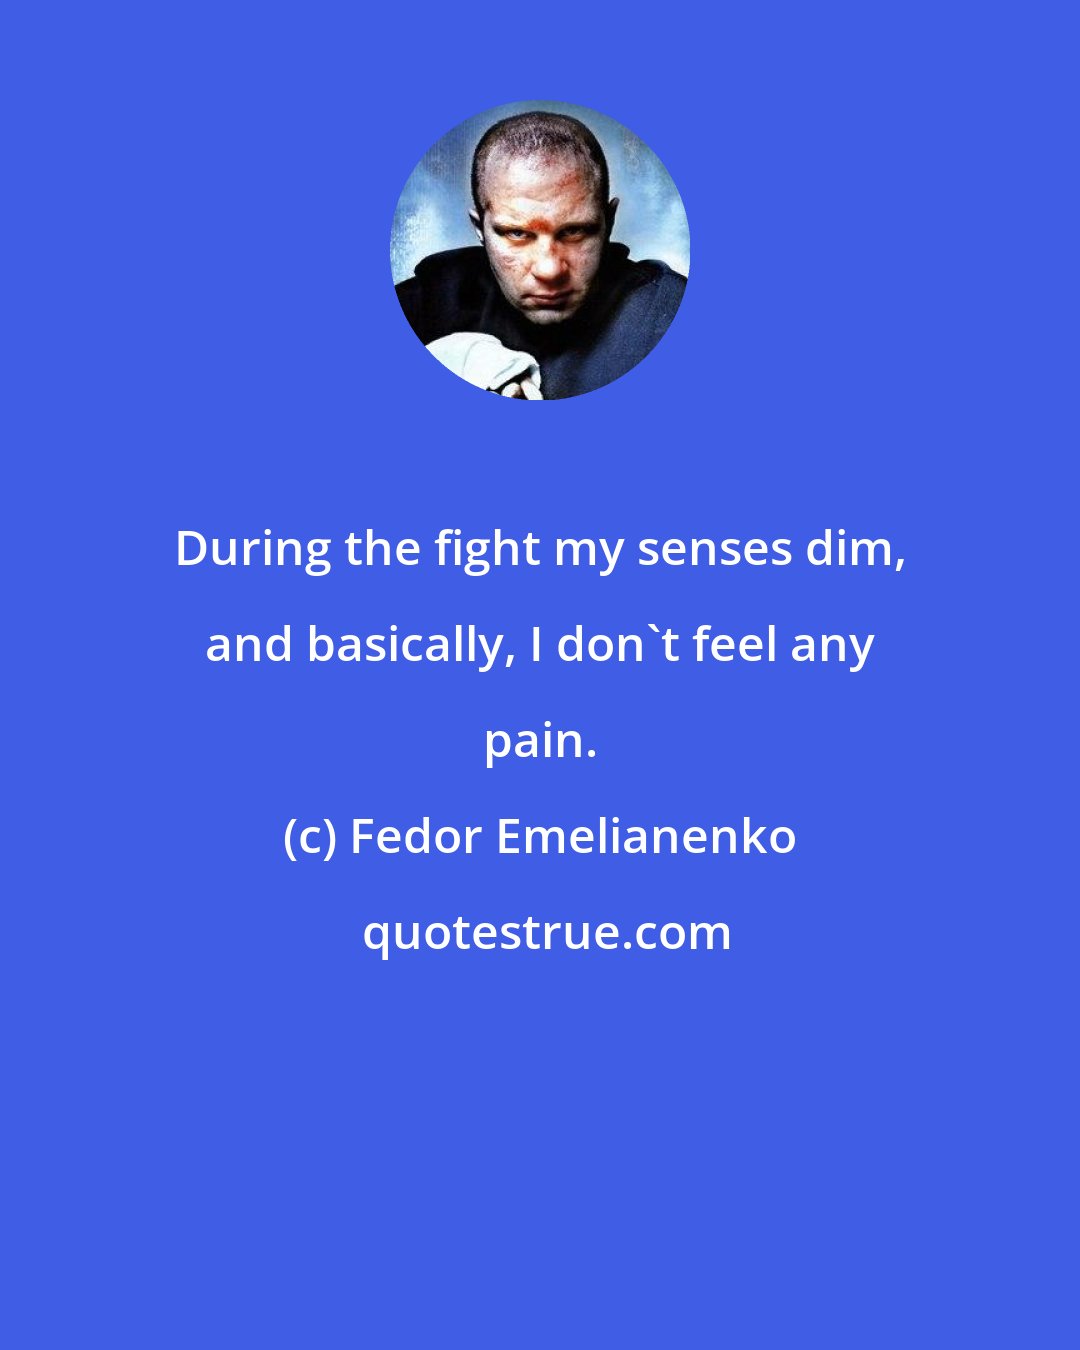 Fedor Emelianenko: During the fight my senses dim, and basically, I don't feel any pain.